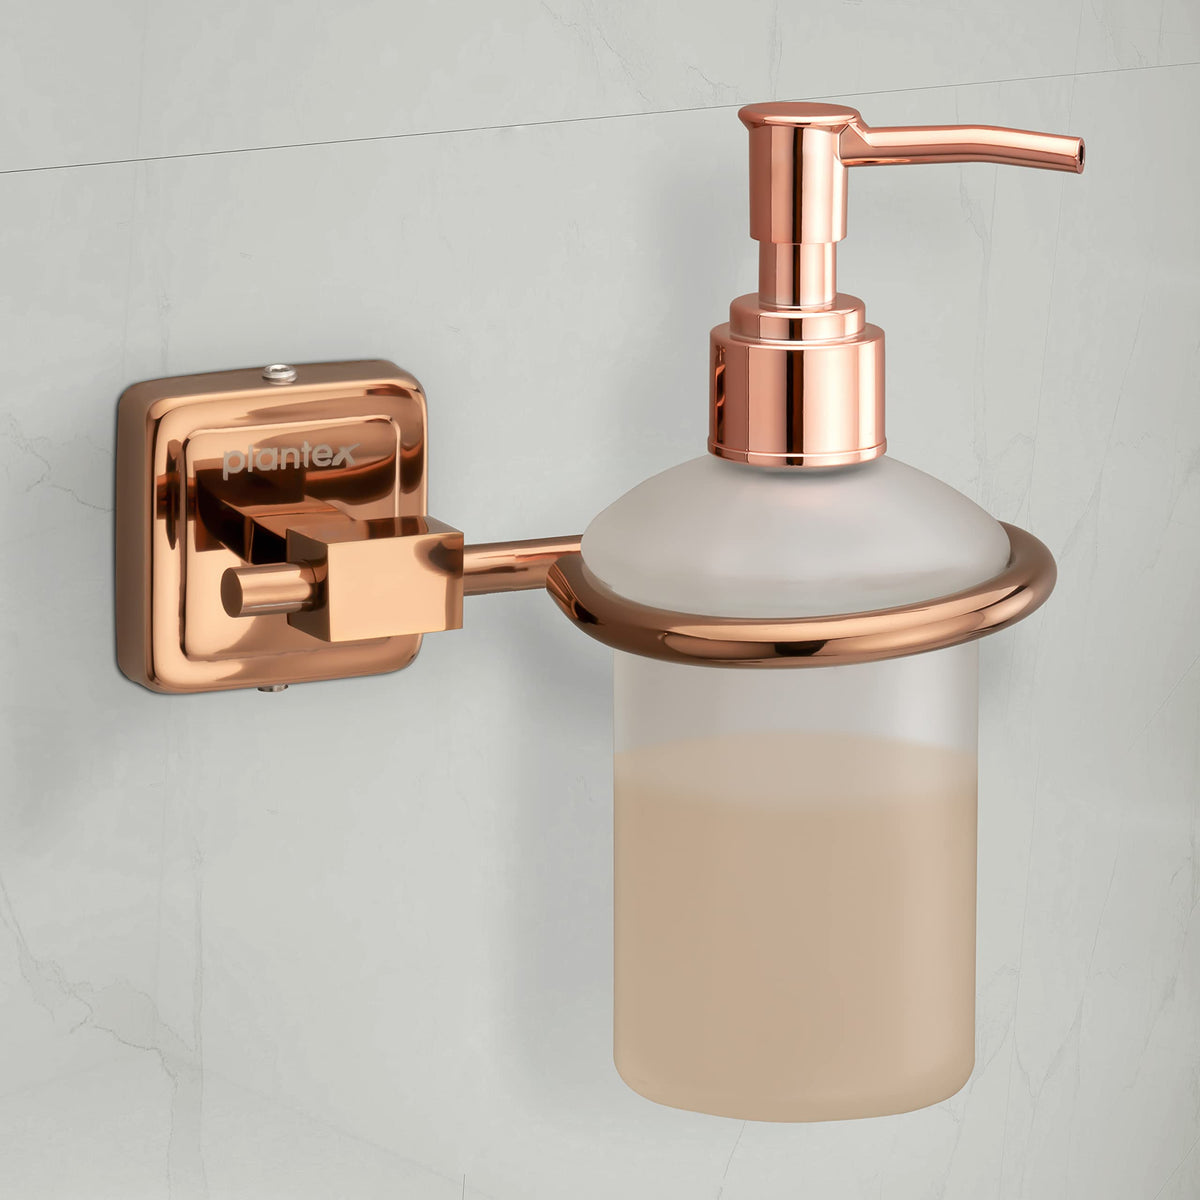 Plantex 304 Grade Stainless Steel Decan Liquid Soap Dispenser/Shampoo Dispenser/Hand Wash Dispenser/Bathroom Accessories - Pack of 1 (654 - PVD Rose Gold)